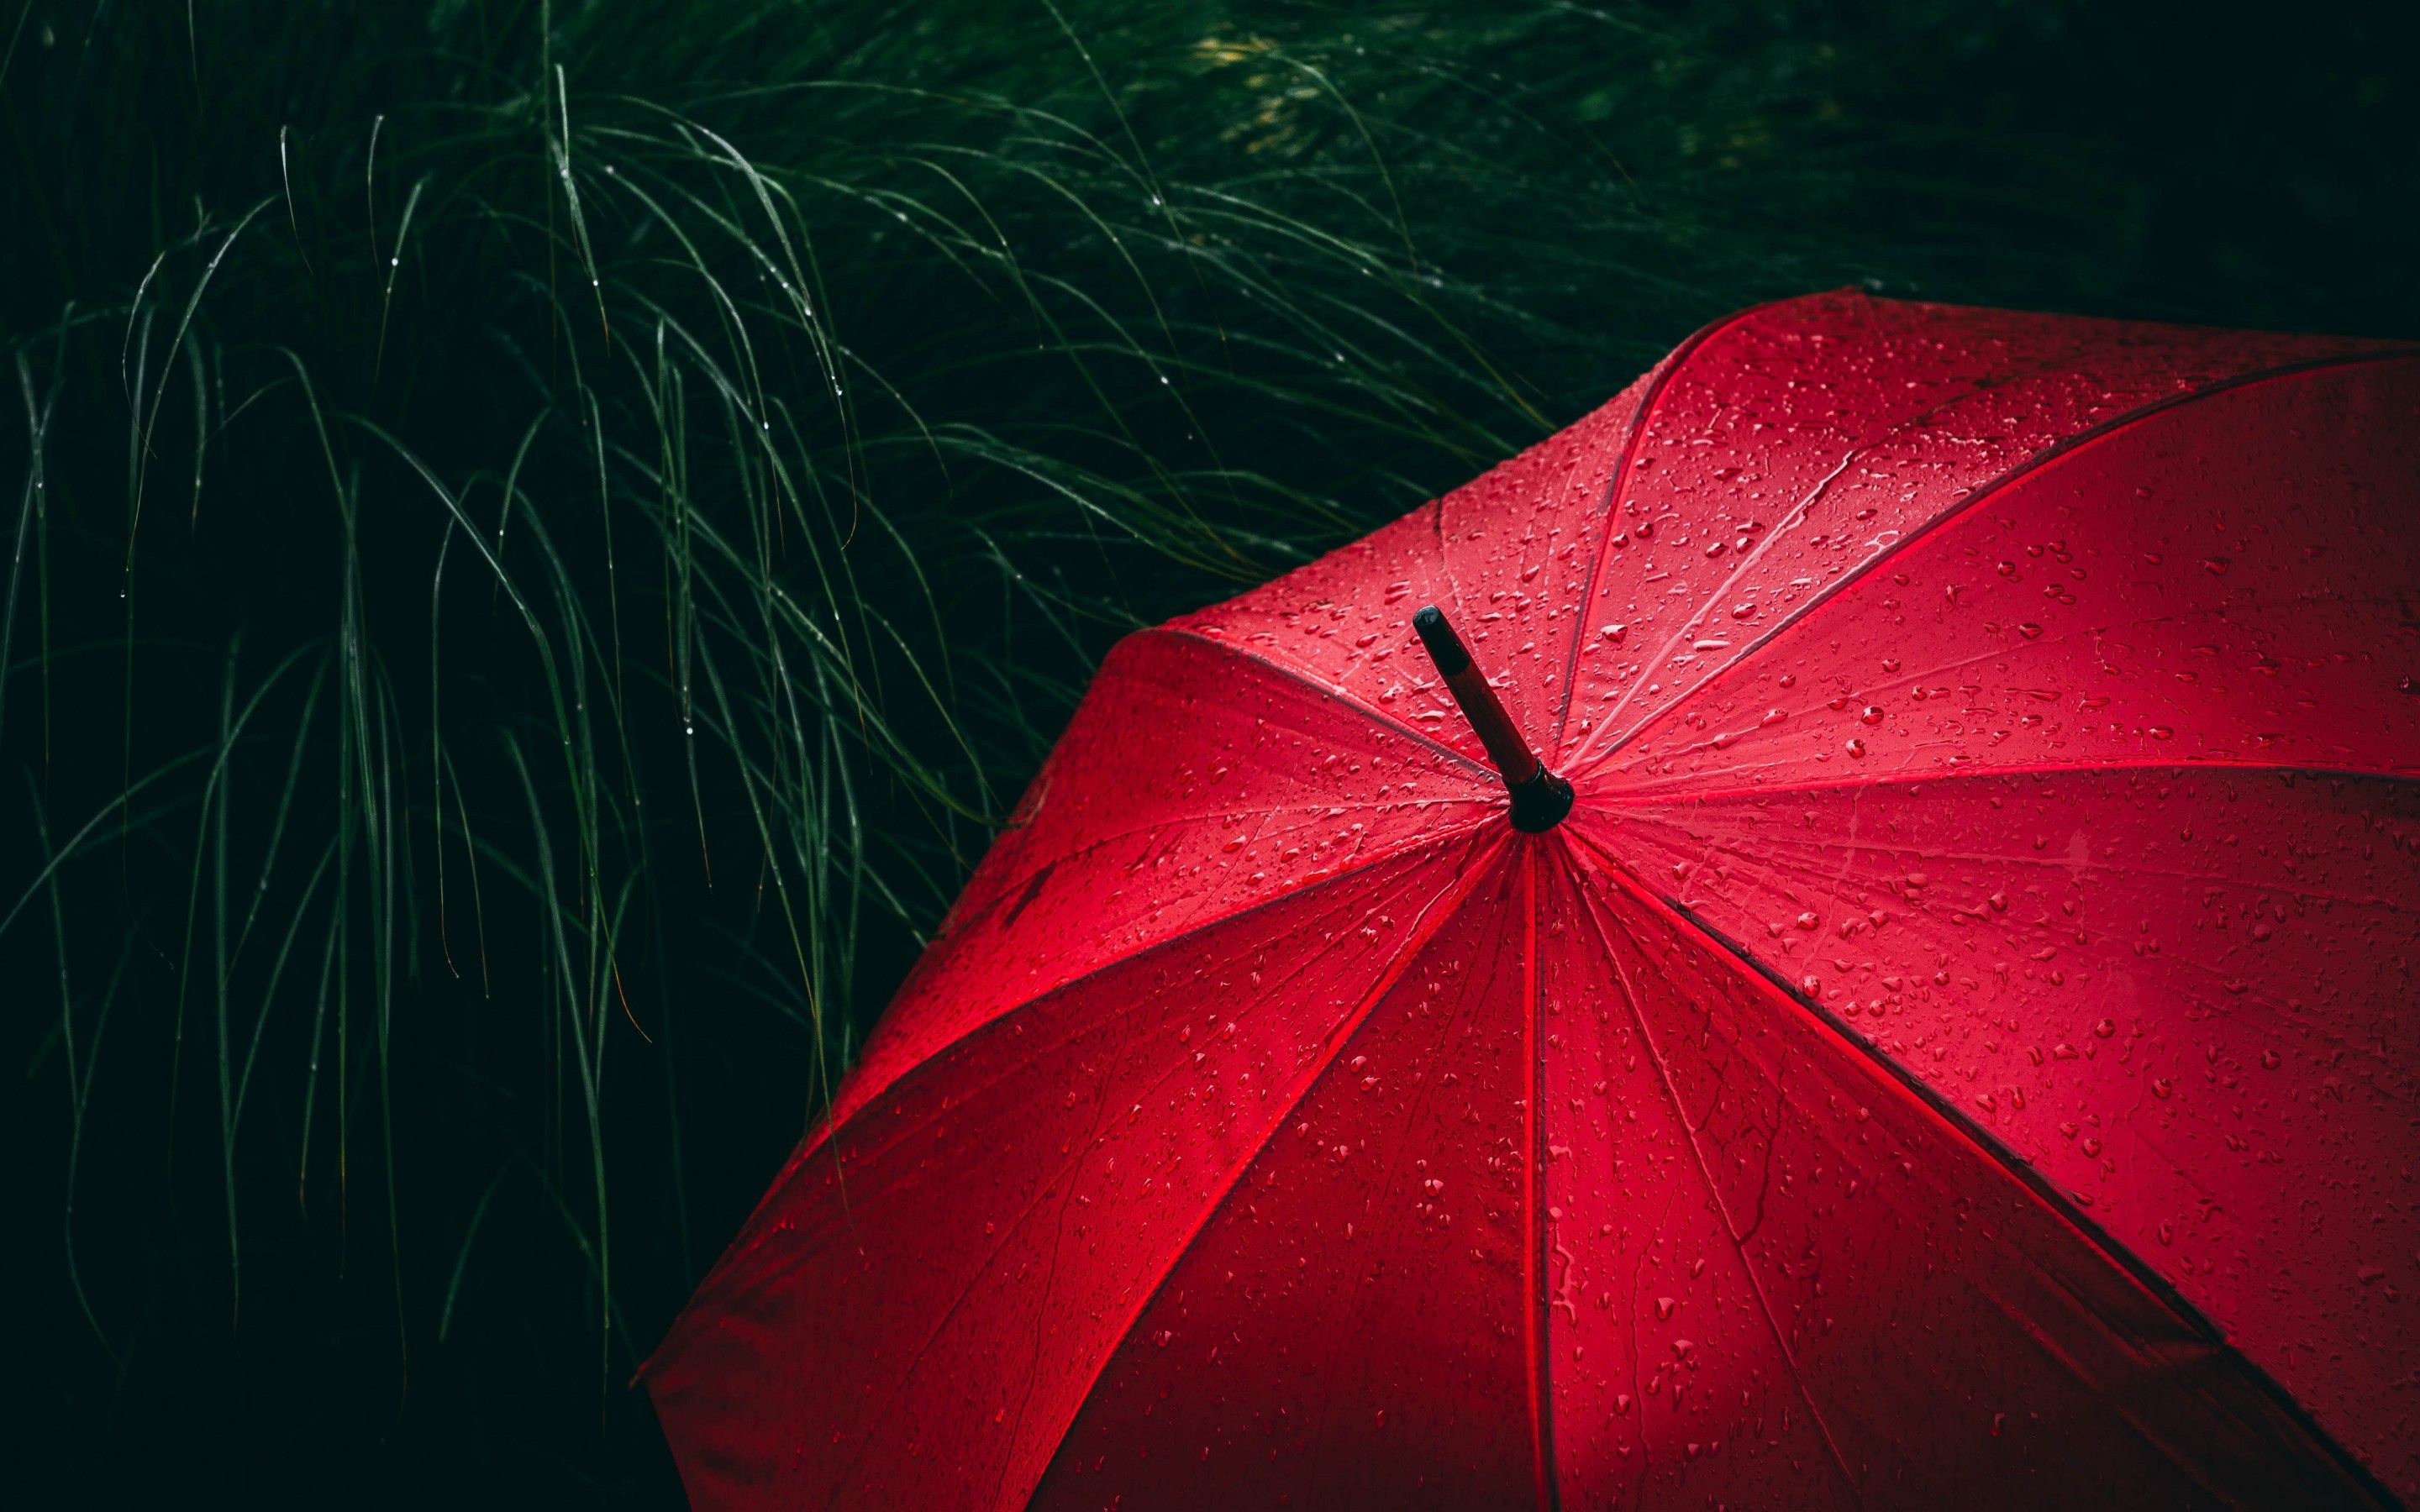 Umbrella 4K Wallpaper, Red, Rain droplets, Rainy day, 5K, Photography